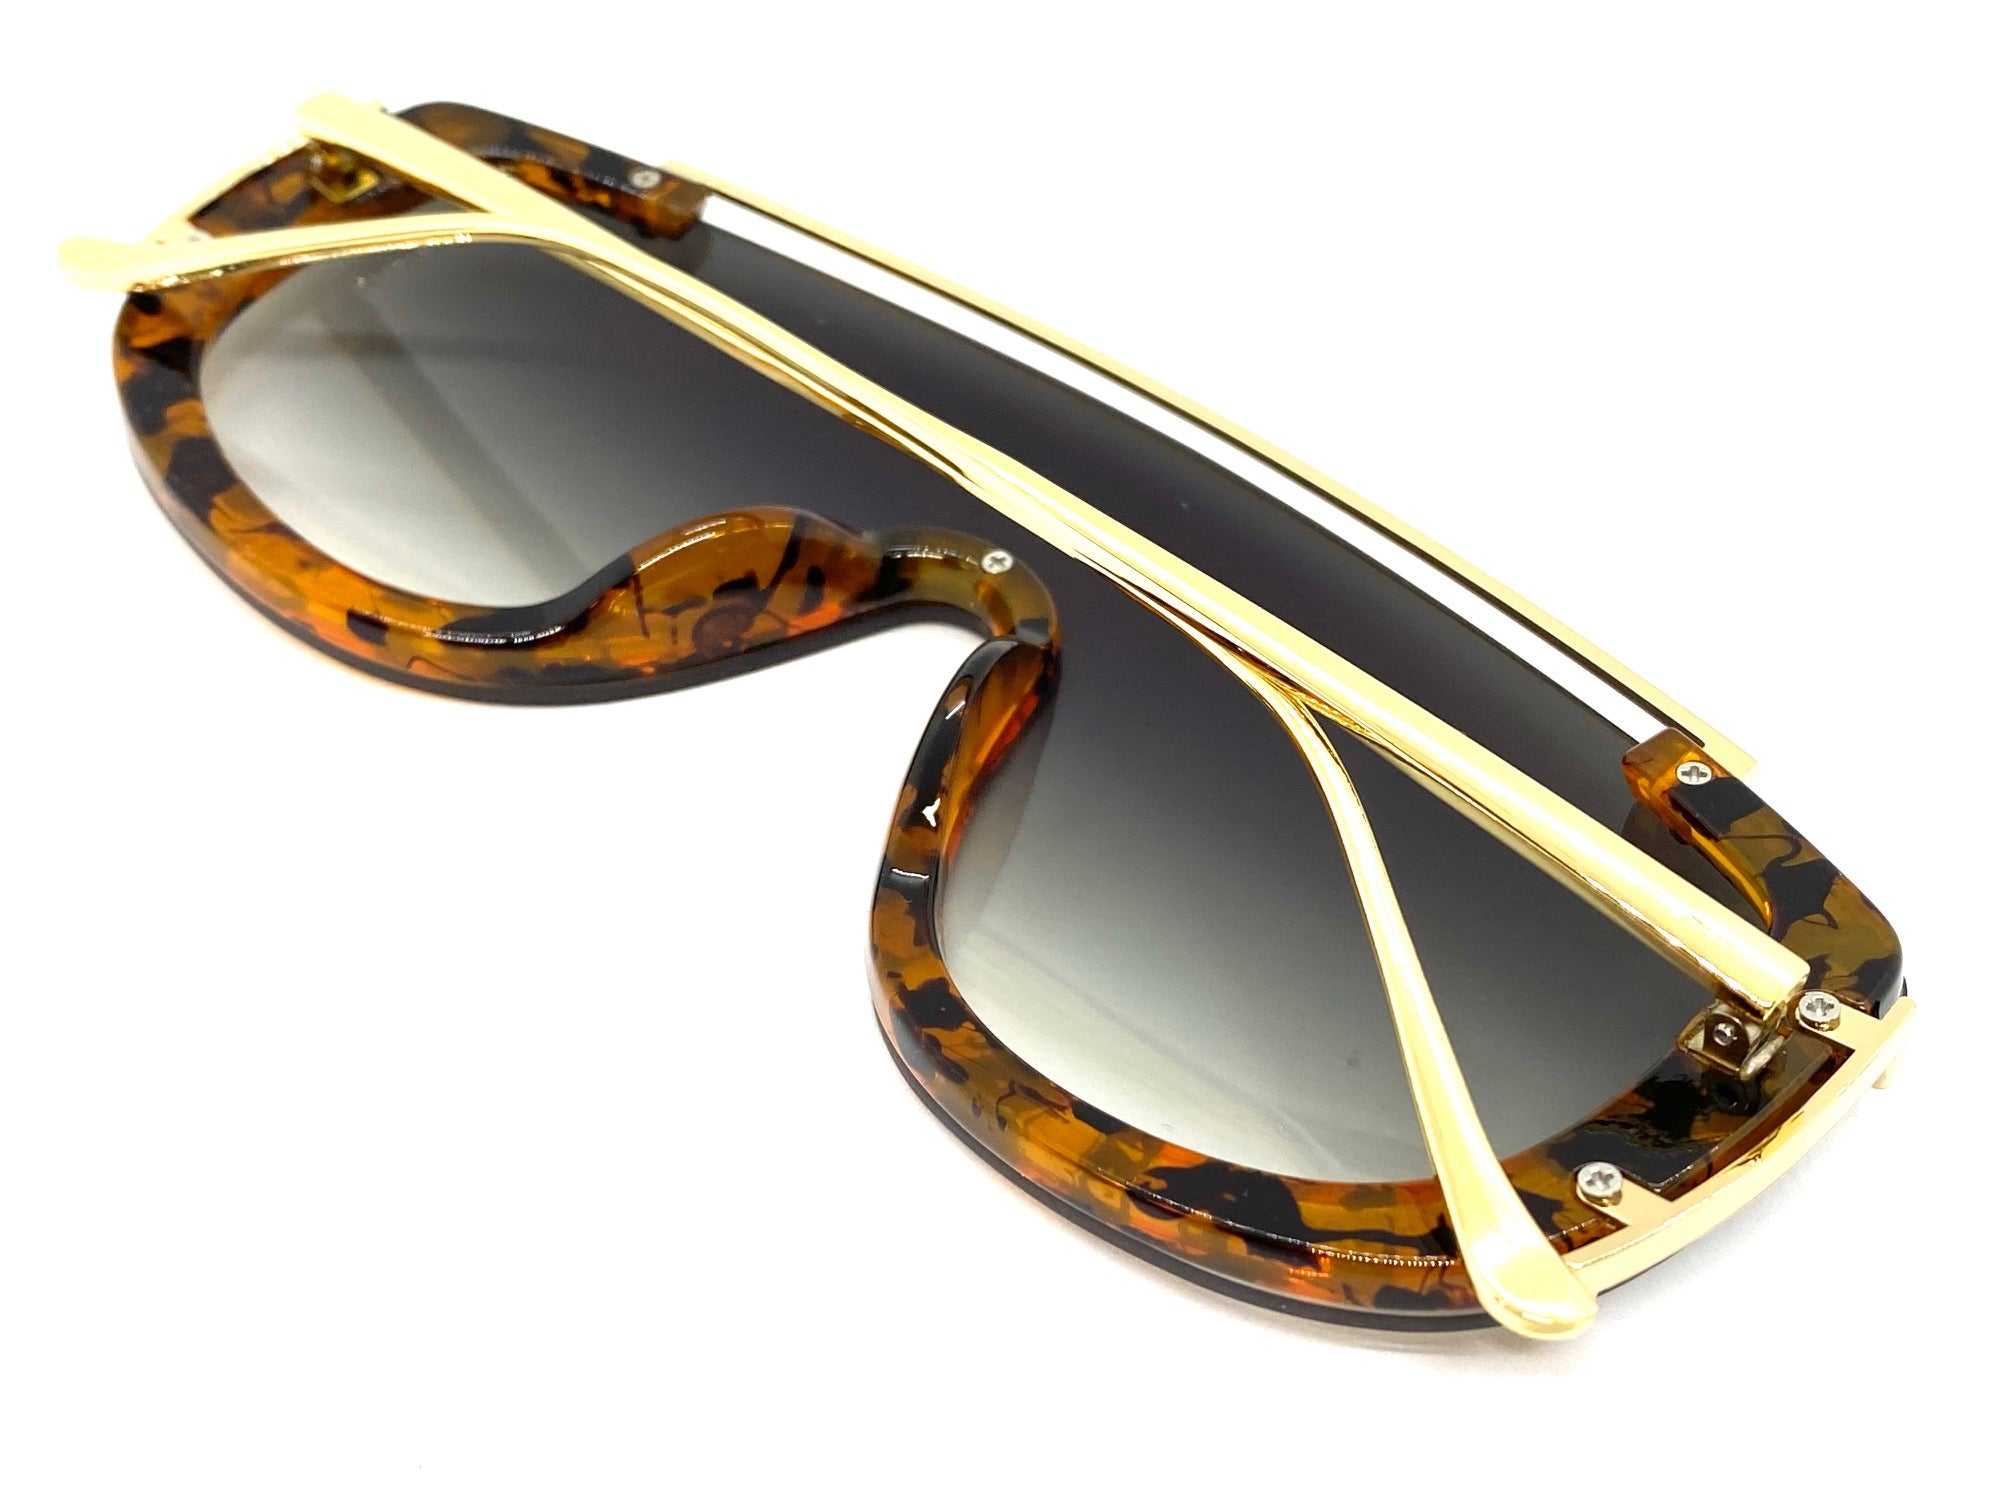 46167 Square Large Frame Luxury Brand Sunglasses Men Women Fashion Uv400  Glasses